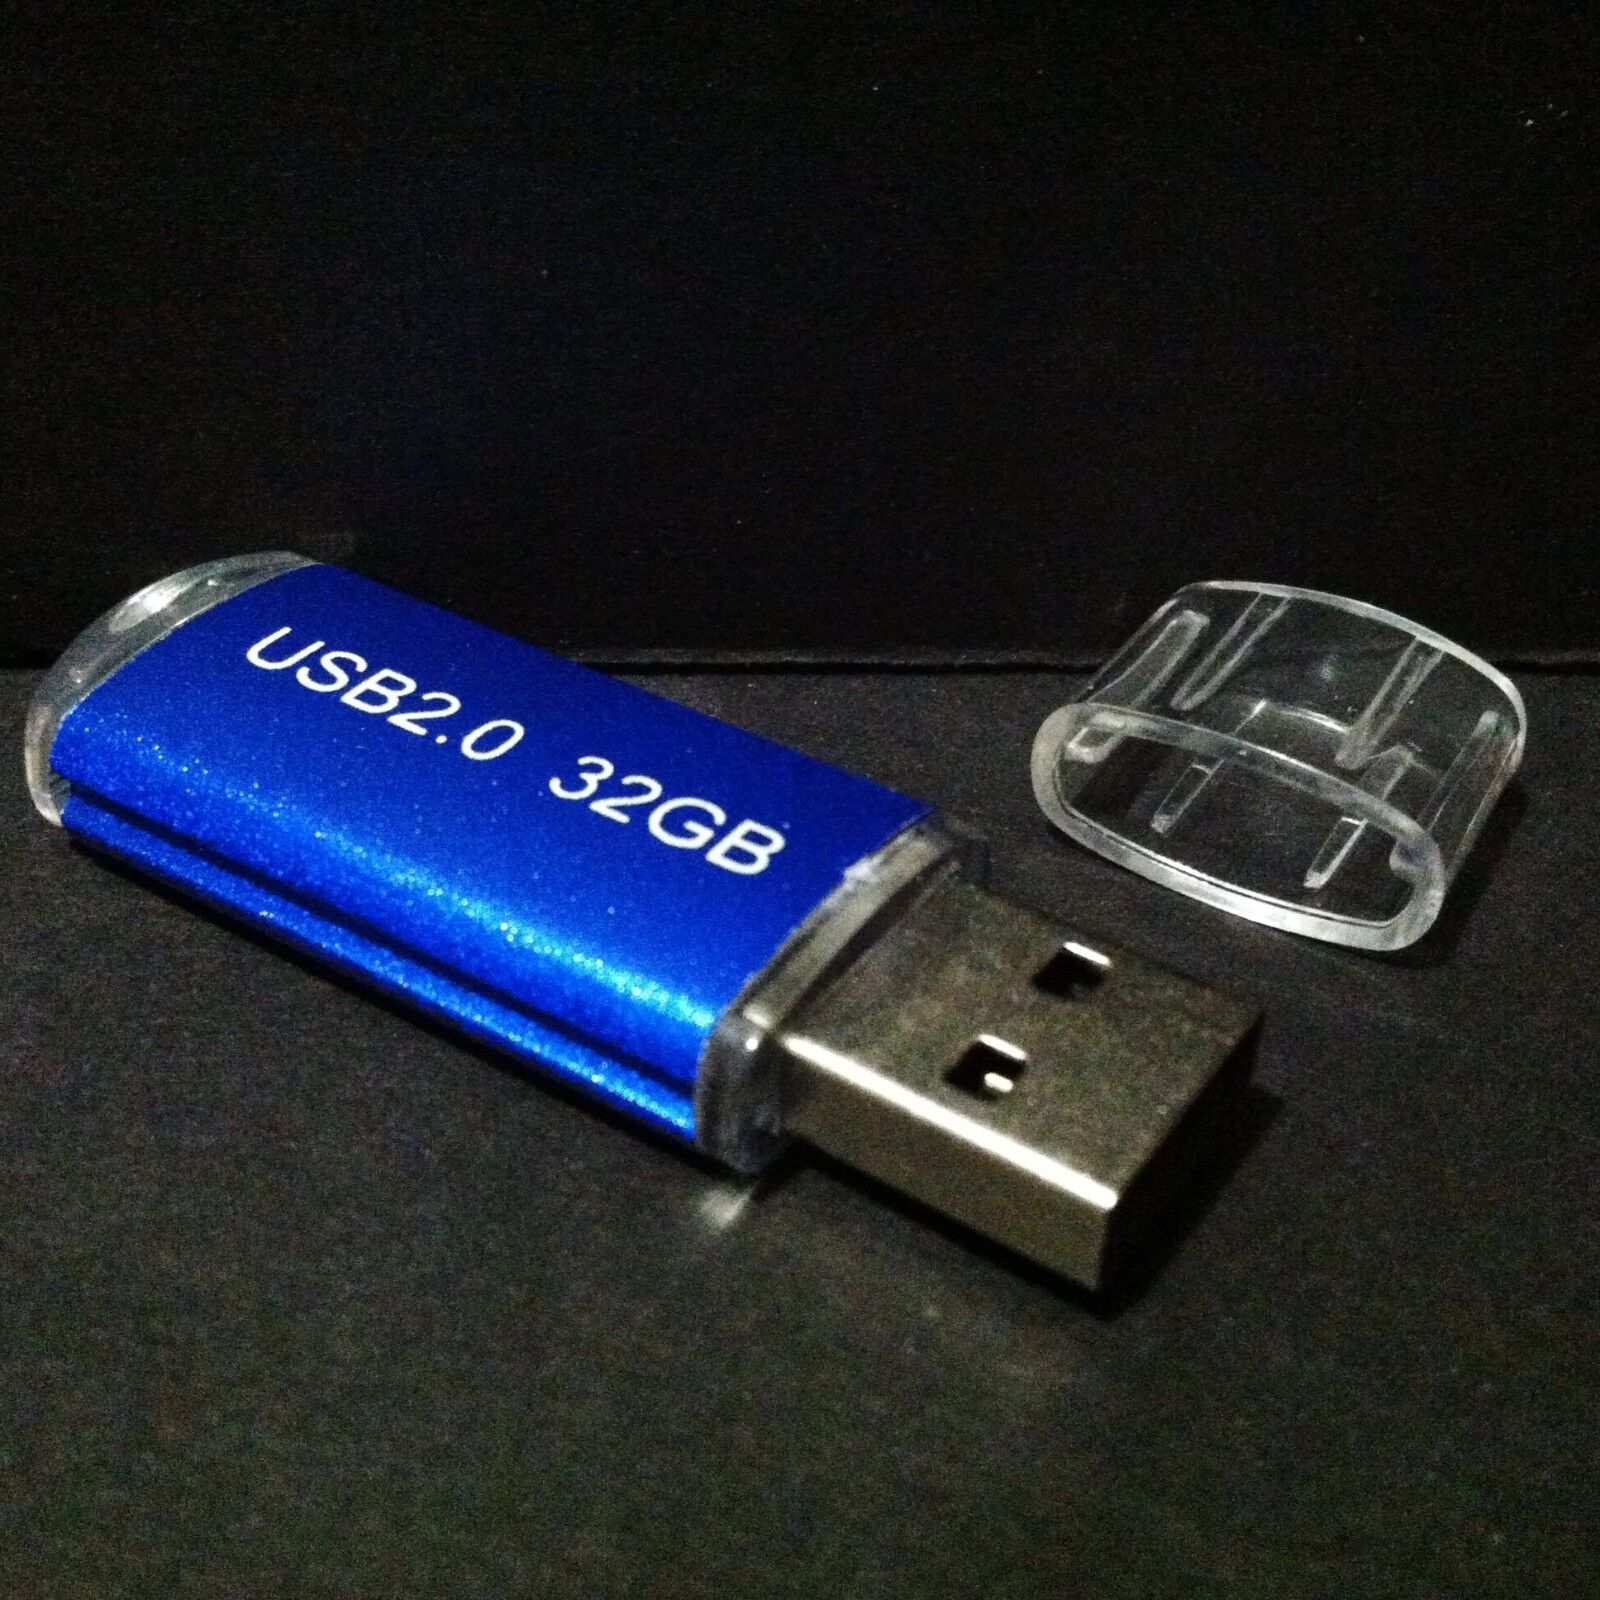 New 32GB 32G USB 2.0 Memory Stick Flash Mini Thumb Drive BLUE USA SELLER 